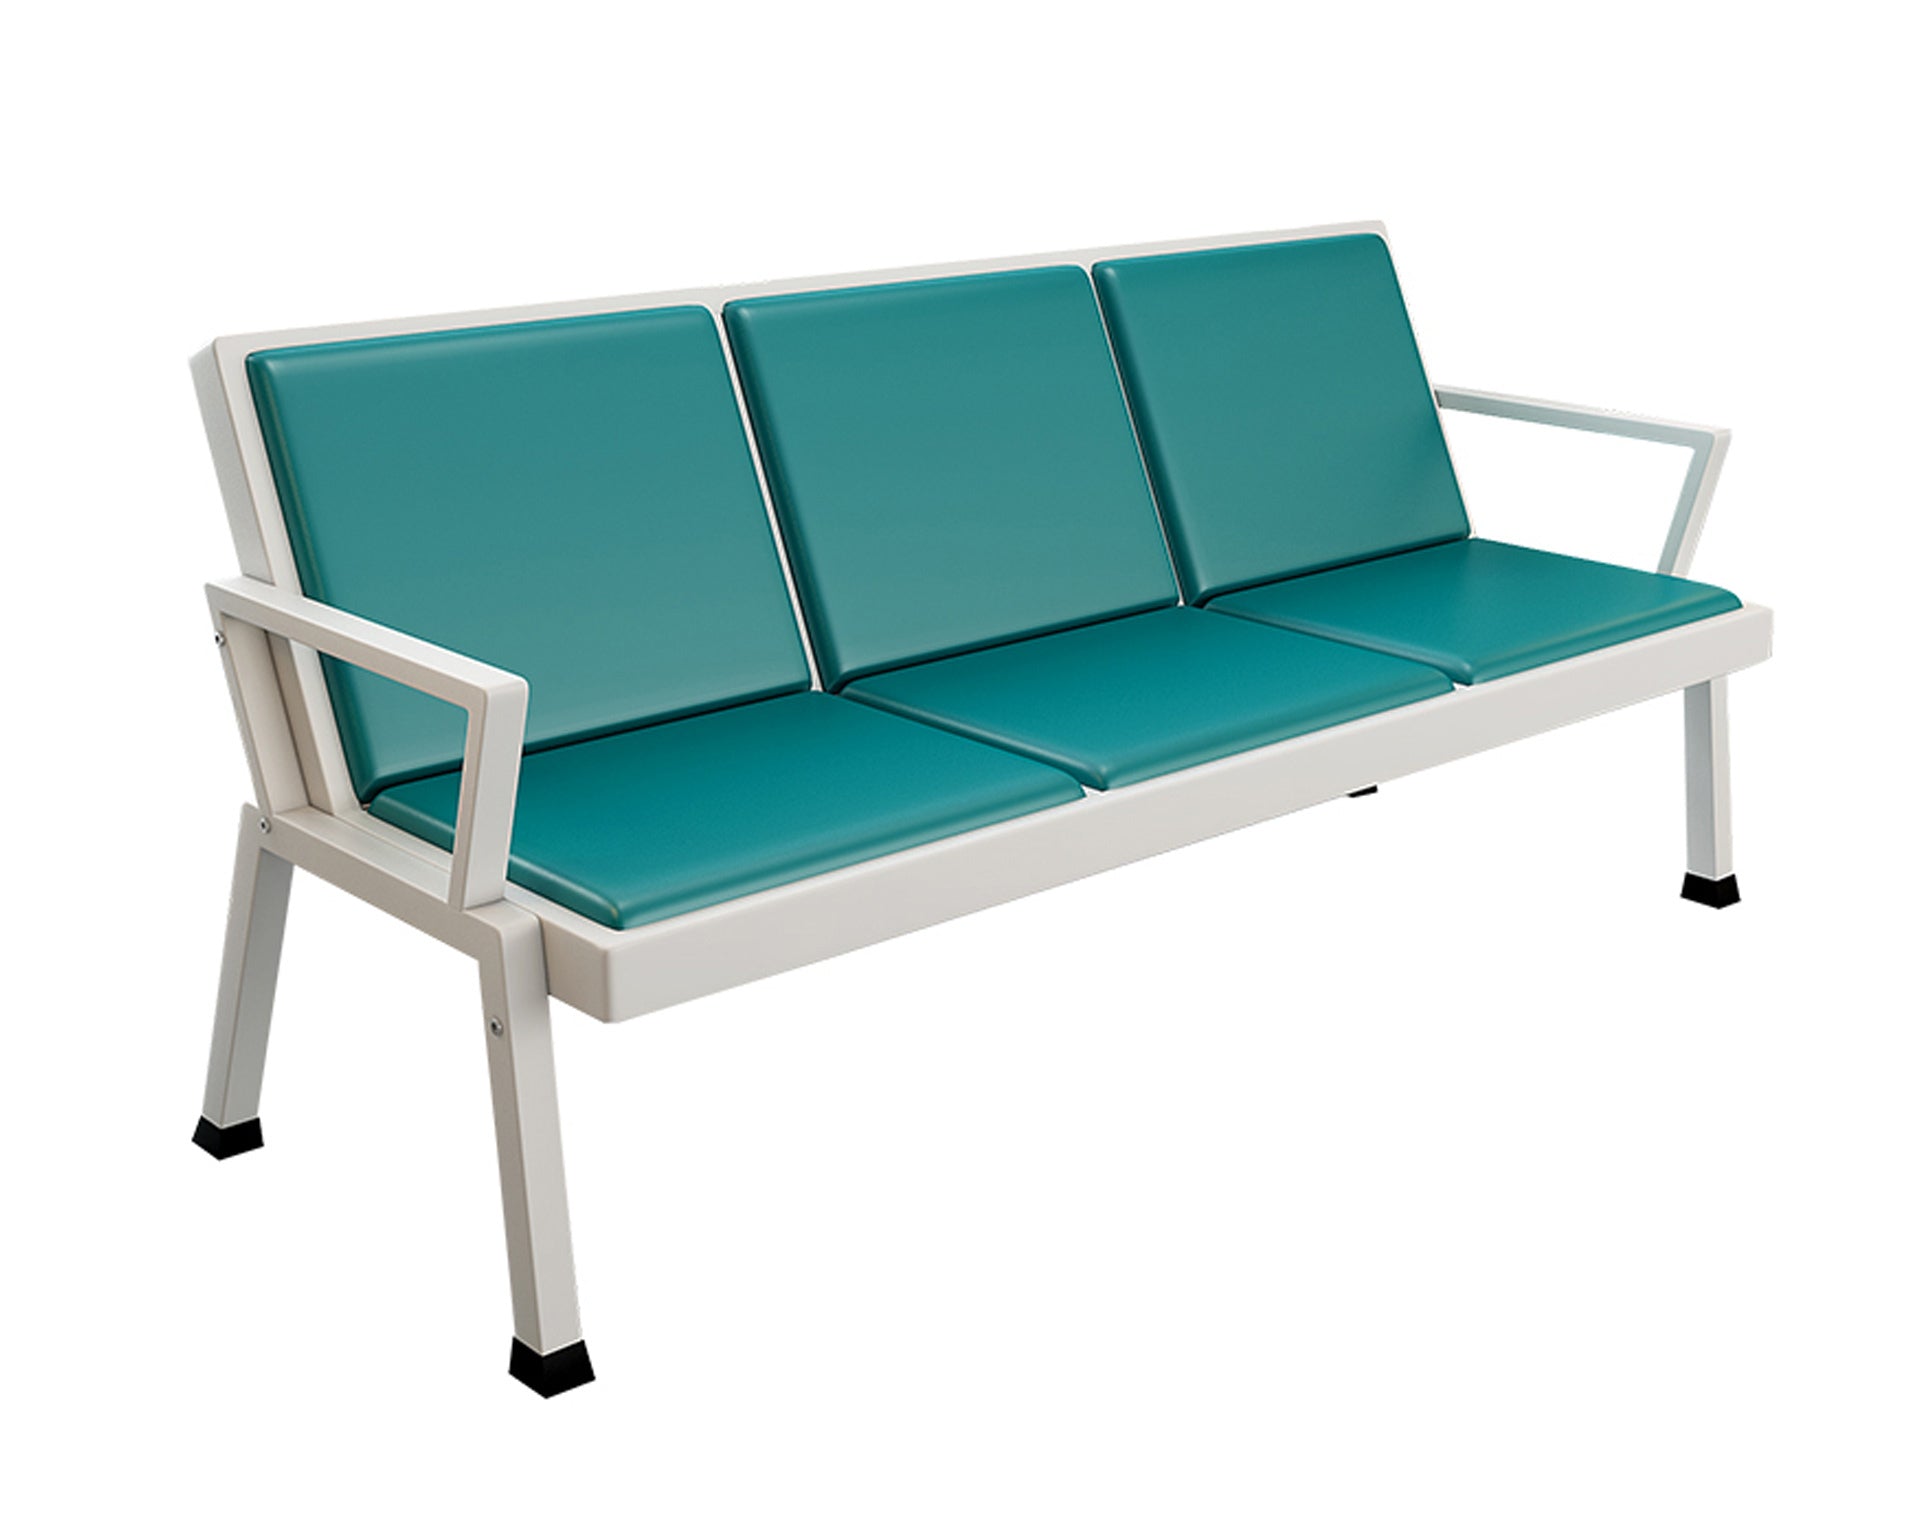 3 Seater Reception Metal Bench | HOG furniture online marketplace